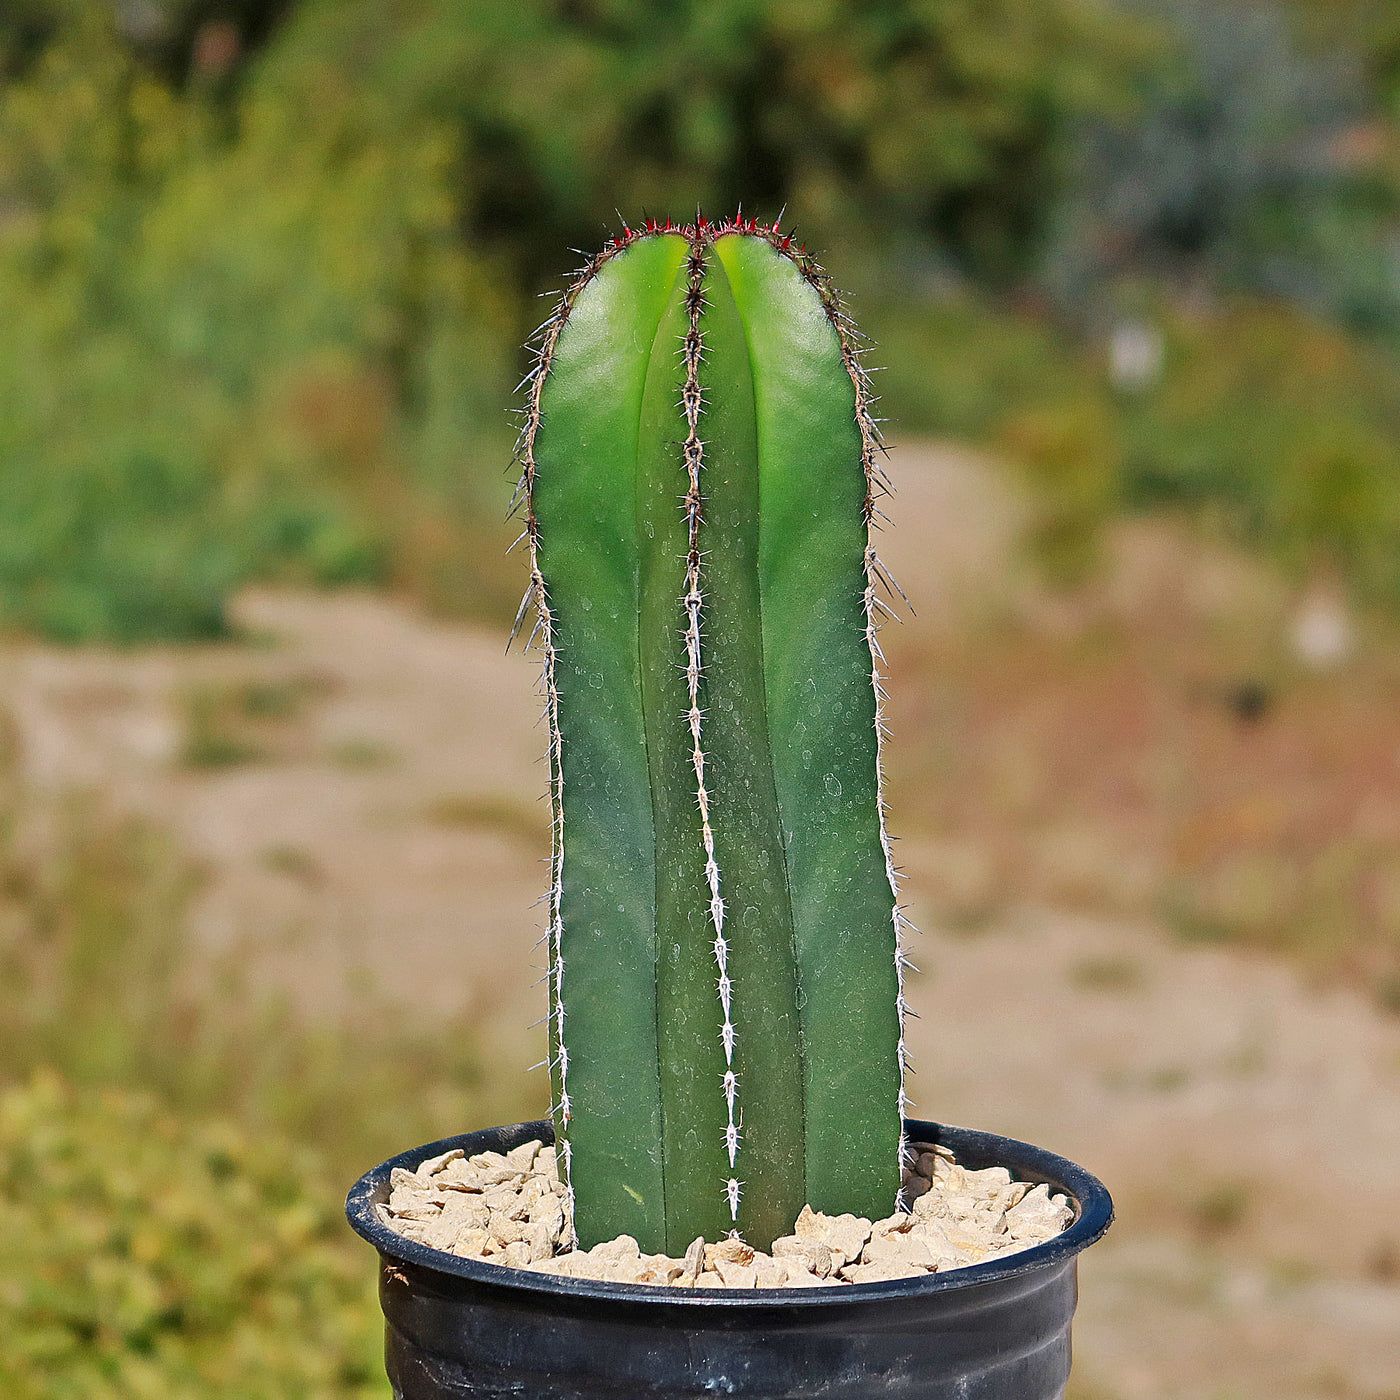 Mexican Fence Post Cactus 'Pachycereus marginatus' (8)